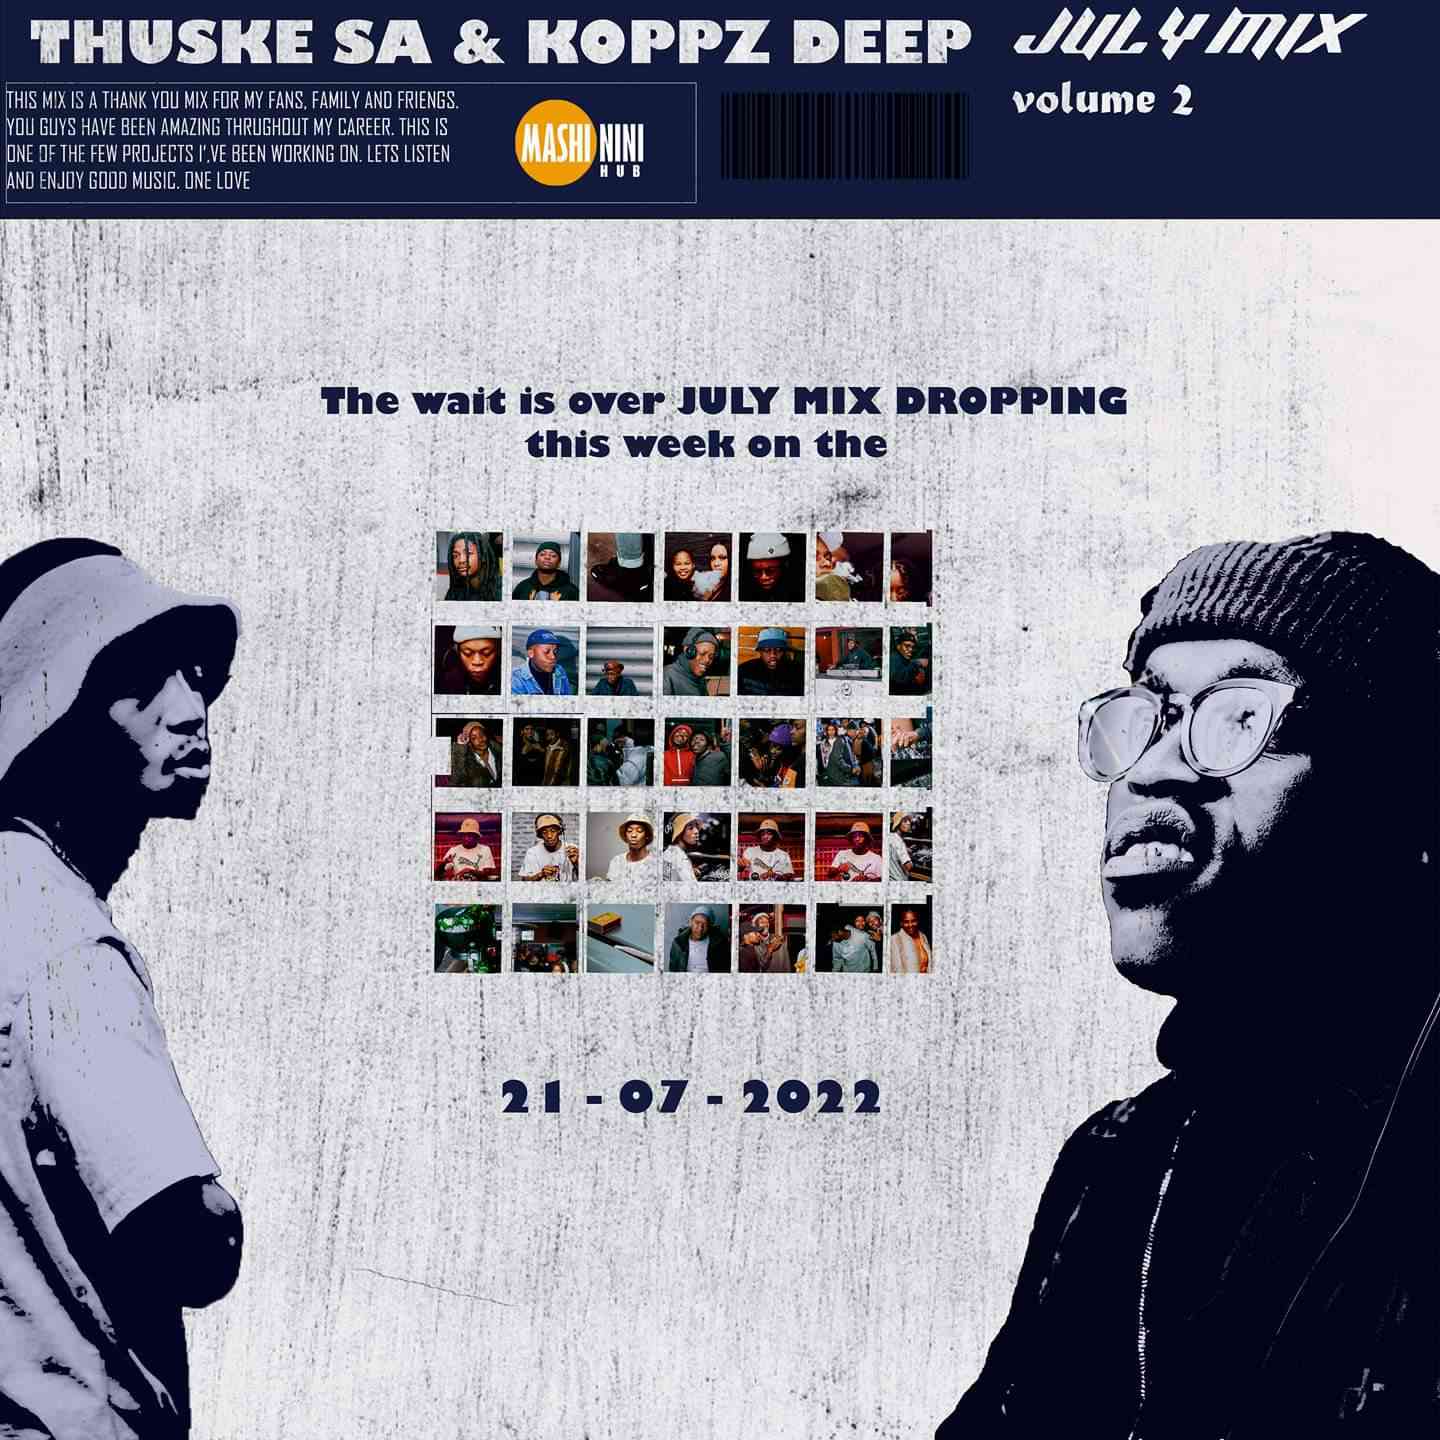 Thuske SA & Koppz Deep July Mix Vol. 2 (100% Production Mix) 